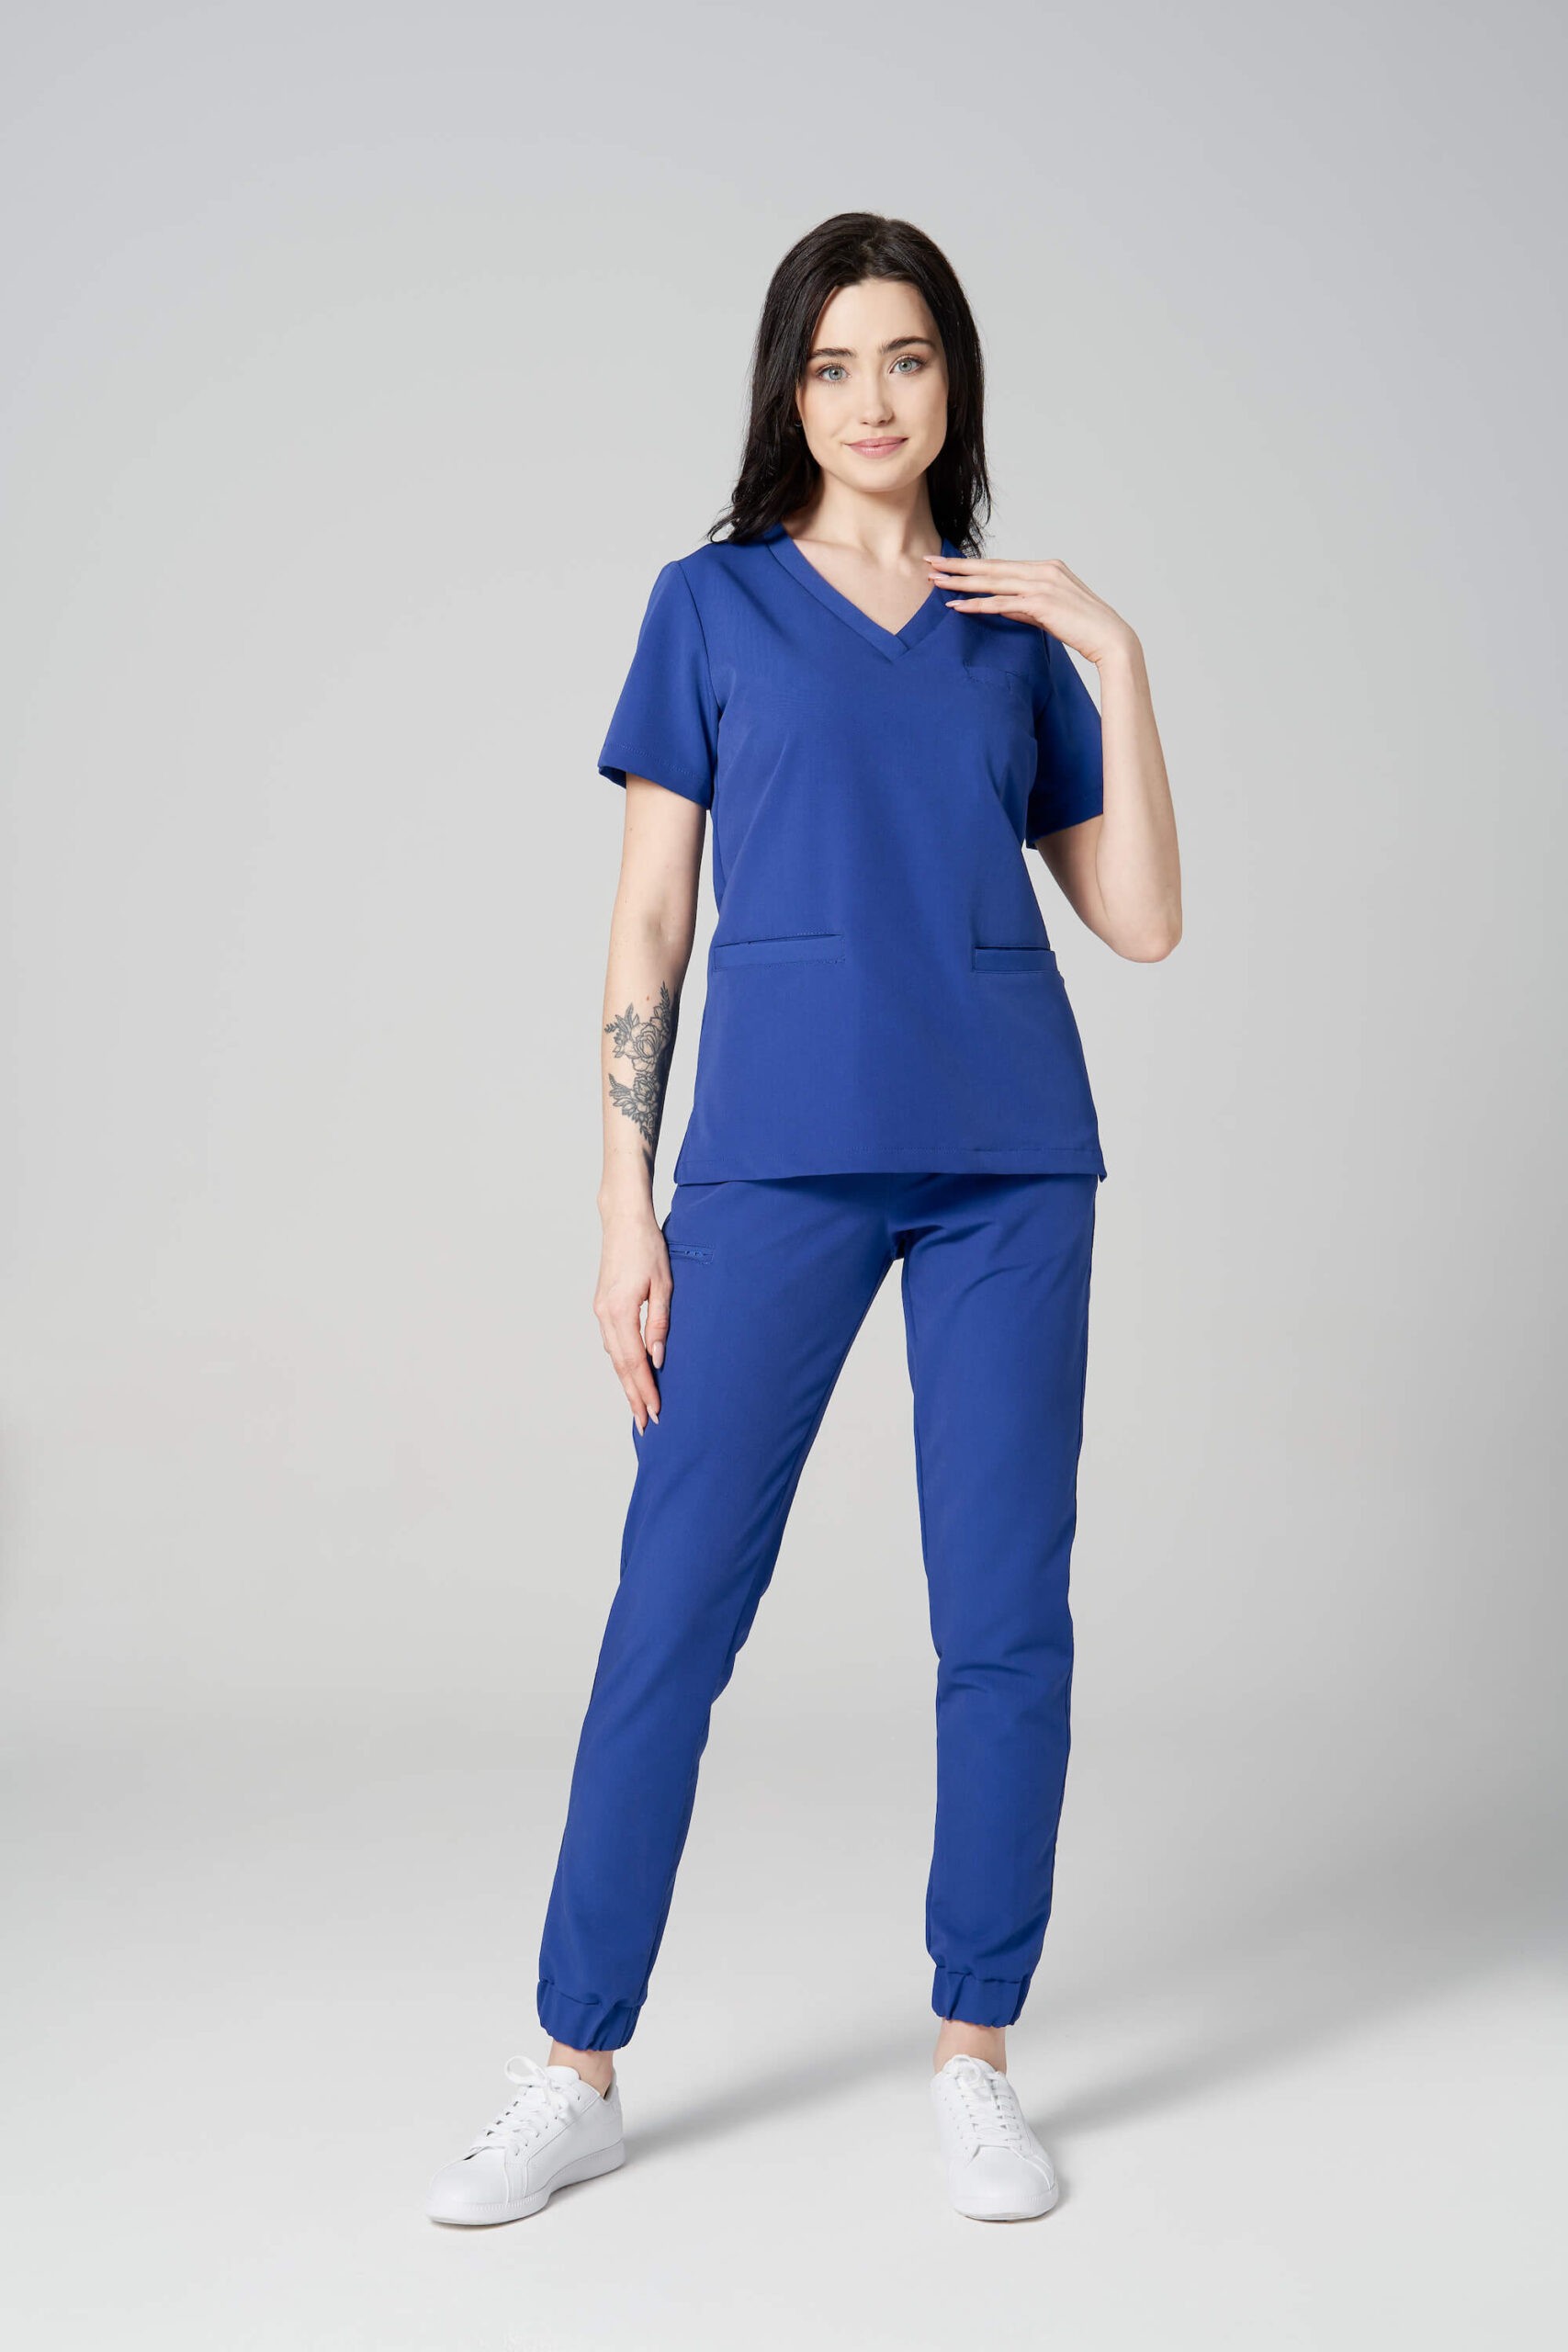 Bluza medyczna damska VALVA healing blue